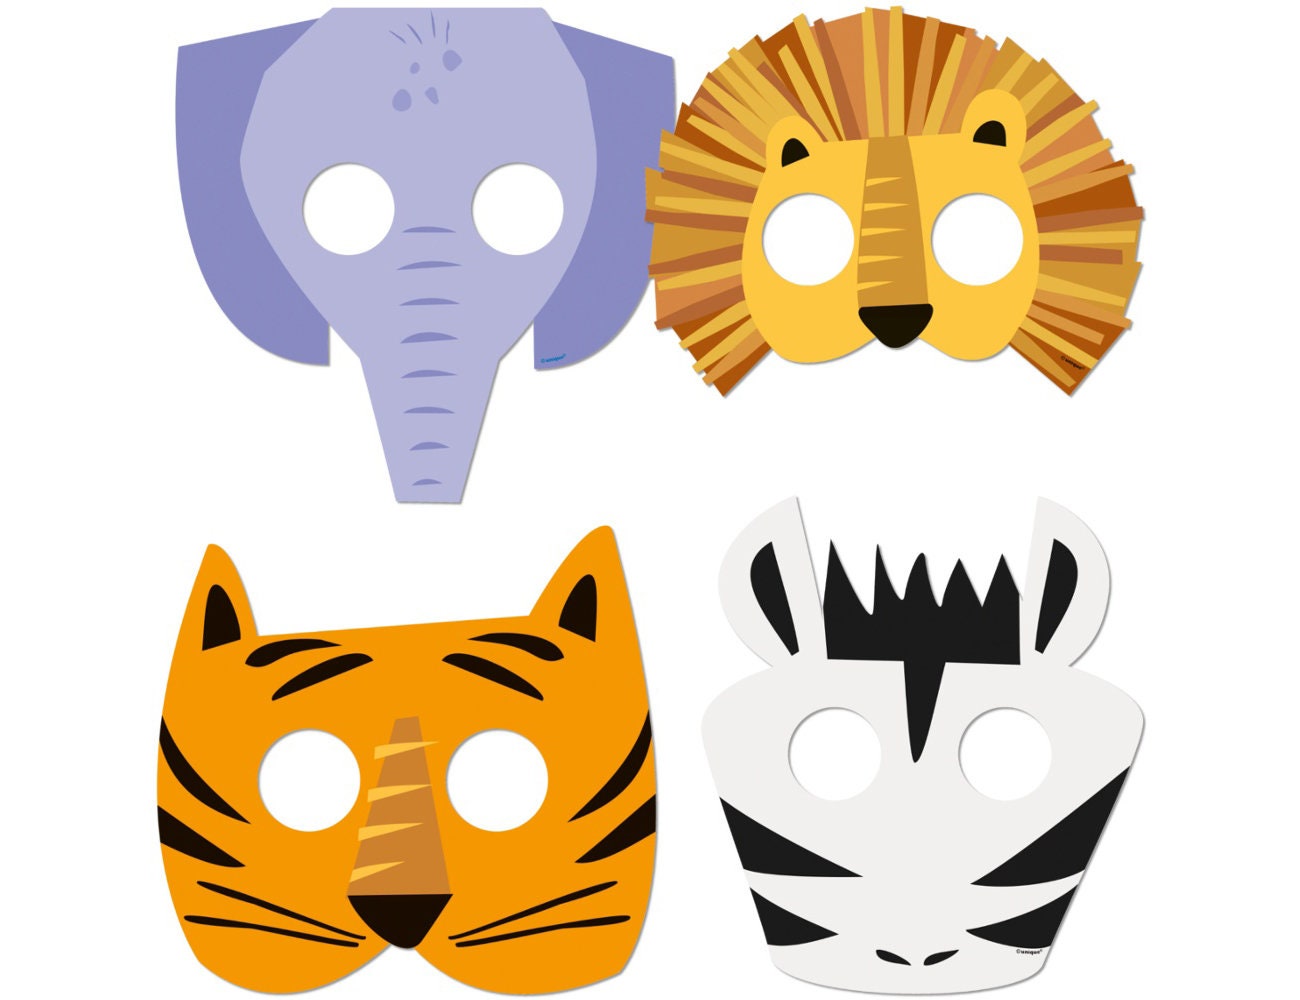 Jungle Safari Masks Child 12 count –